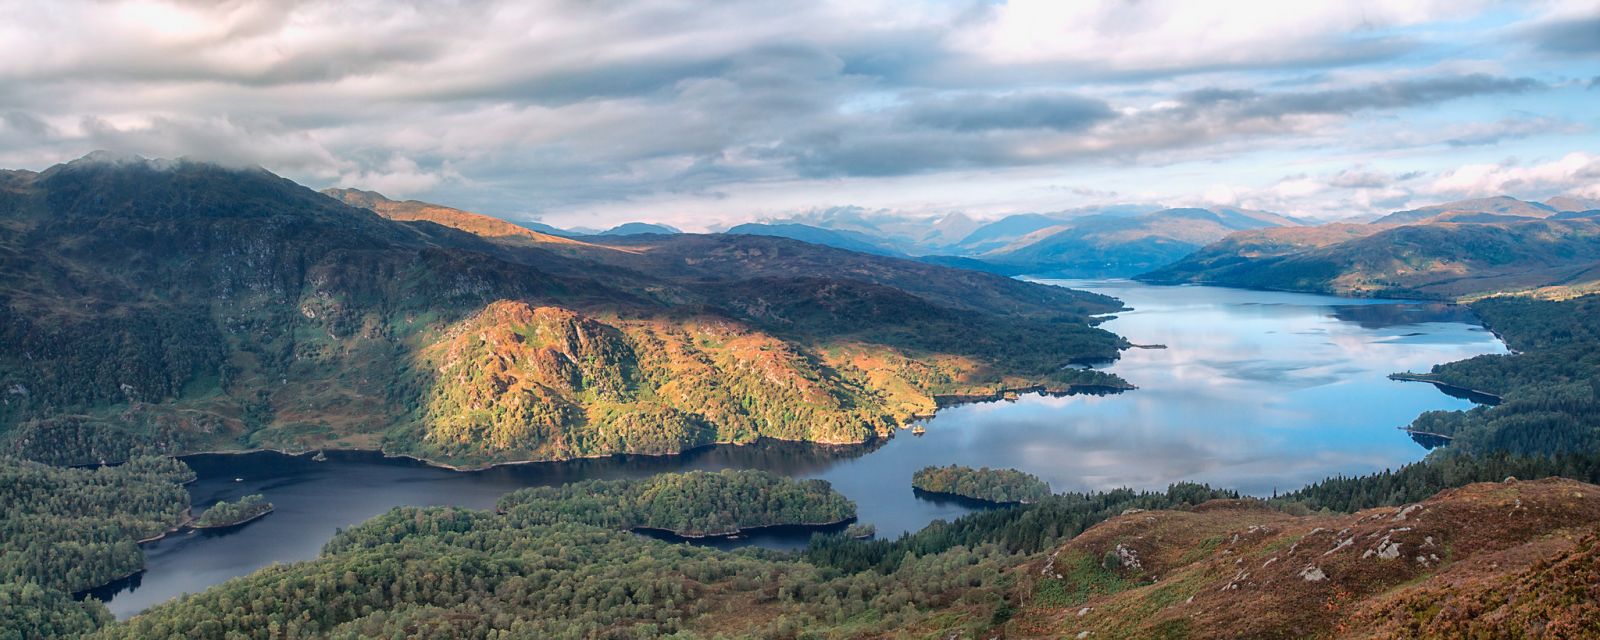 Loch Katerine by John McSporran